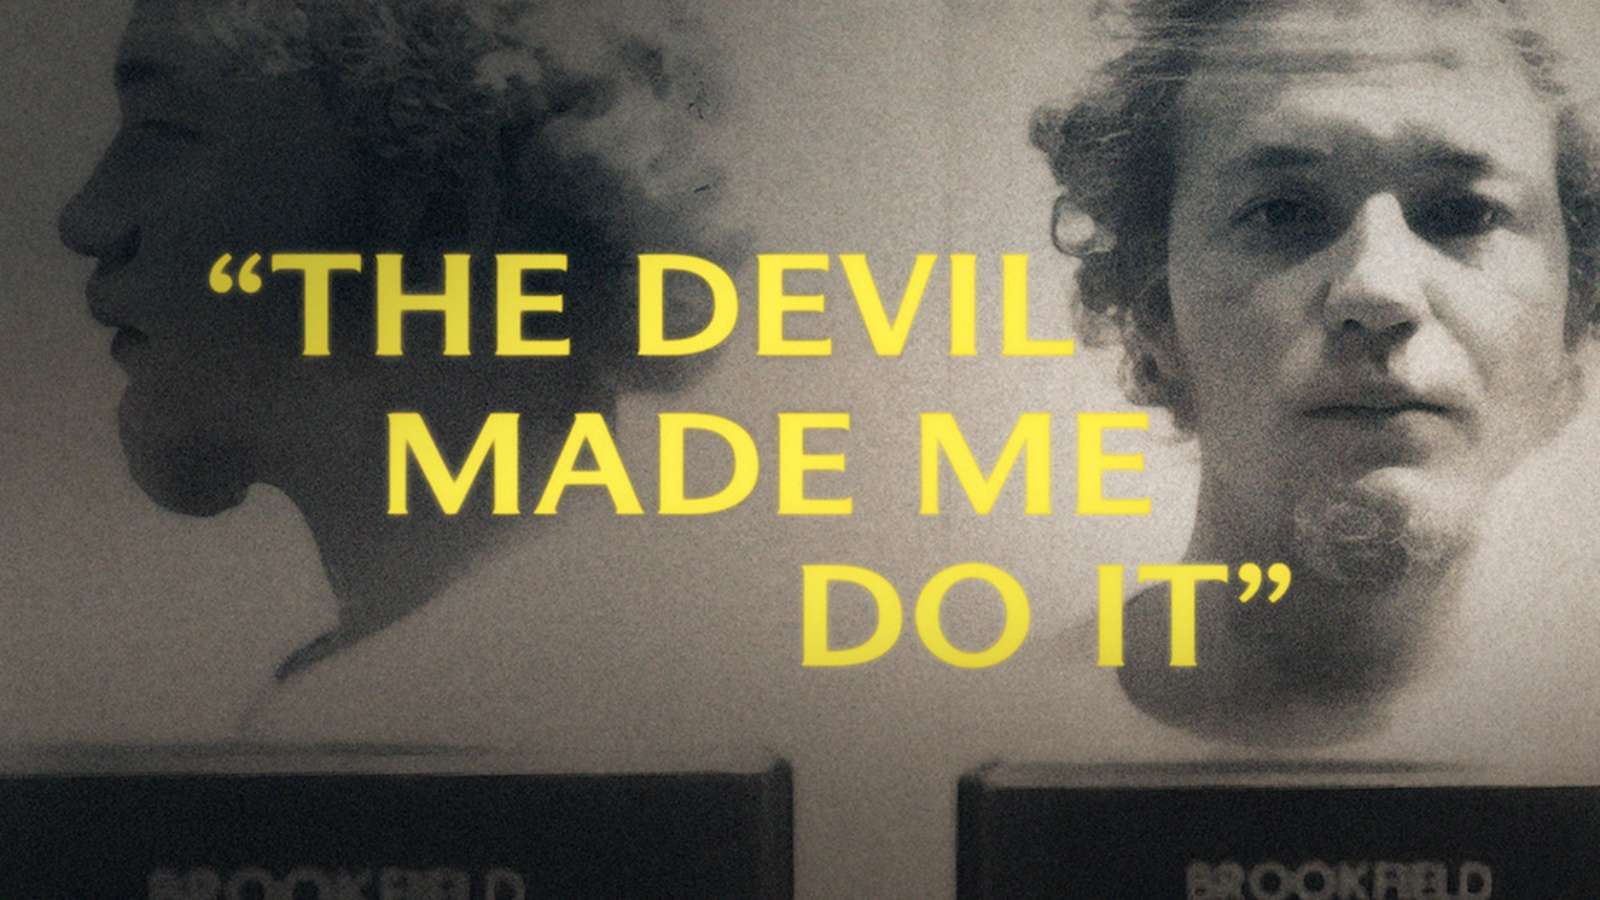 Arne Cheyenne Johnson mugshot in The Devil Made Me Do It